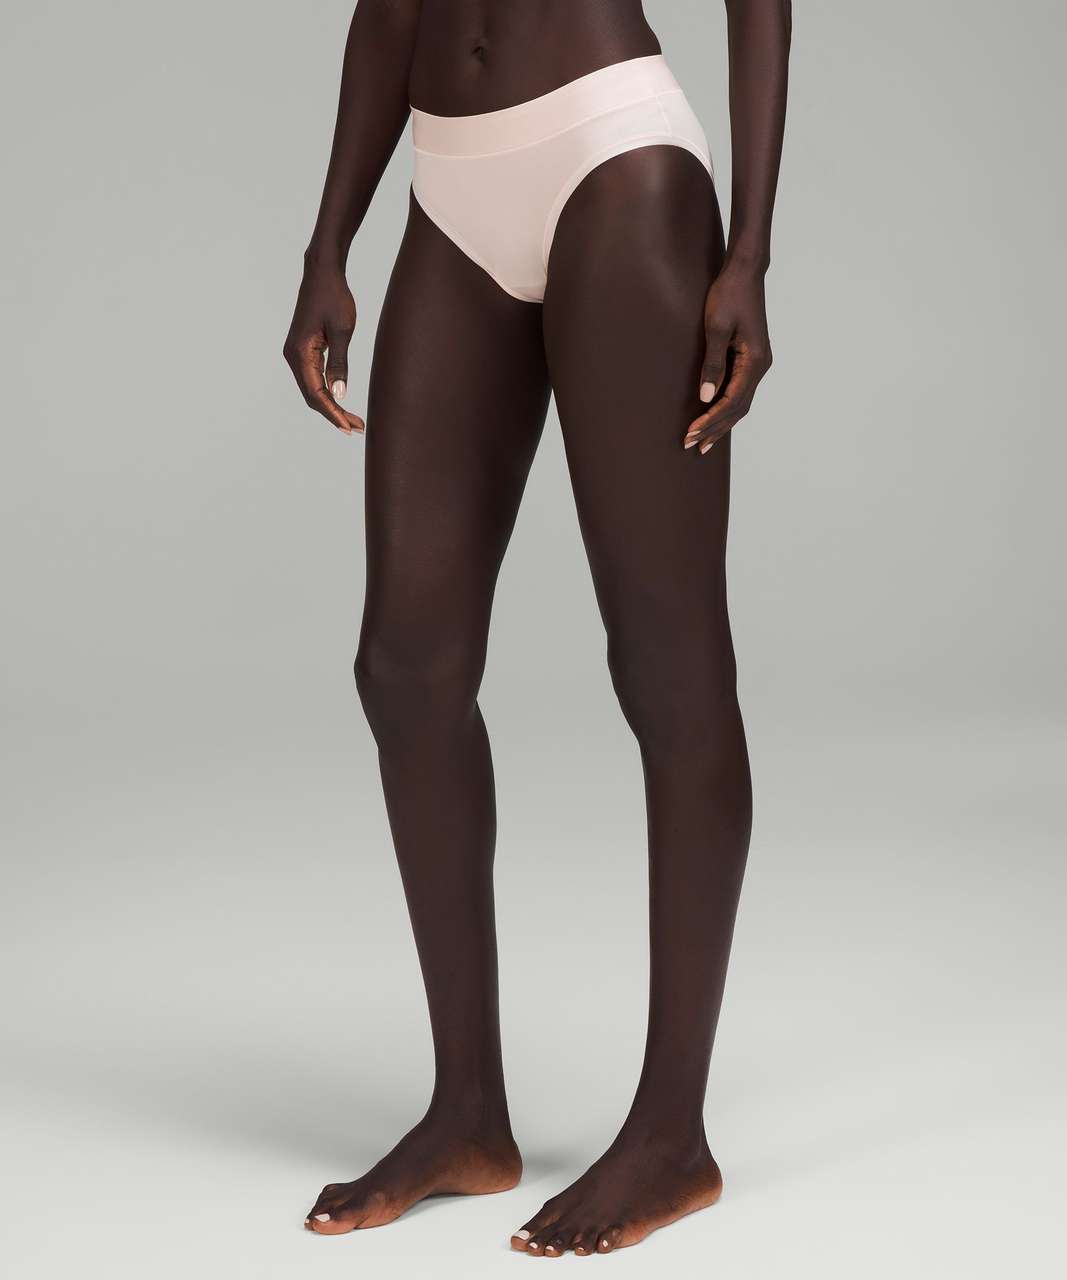 Lululemon UnderEase Mid-Rise Cheeky Bikini Underwear 3 Pack - Double Dimension Starlight Black / Butter Pink / Black